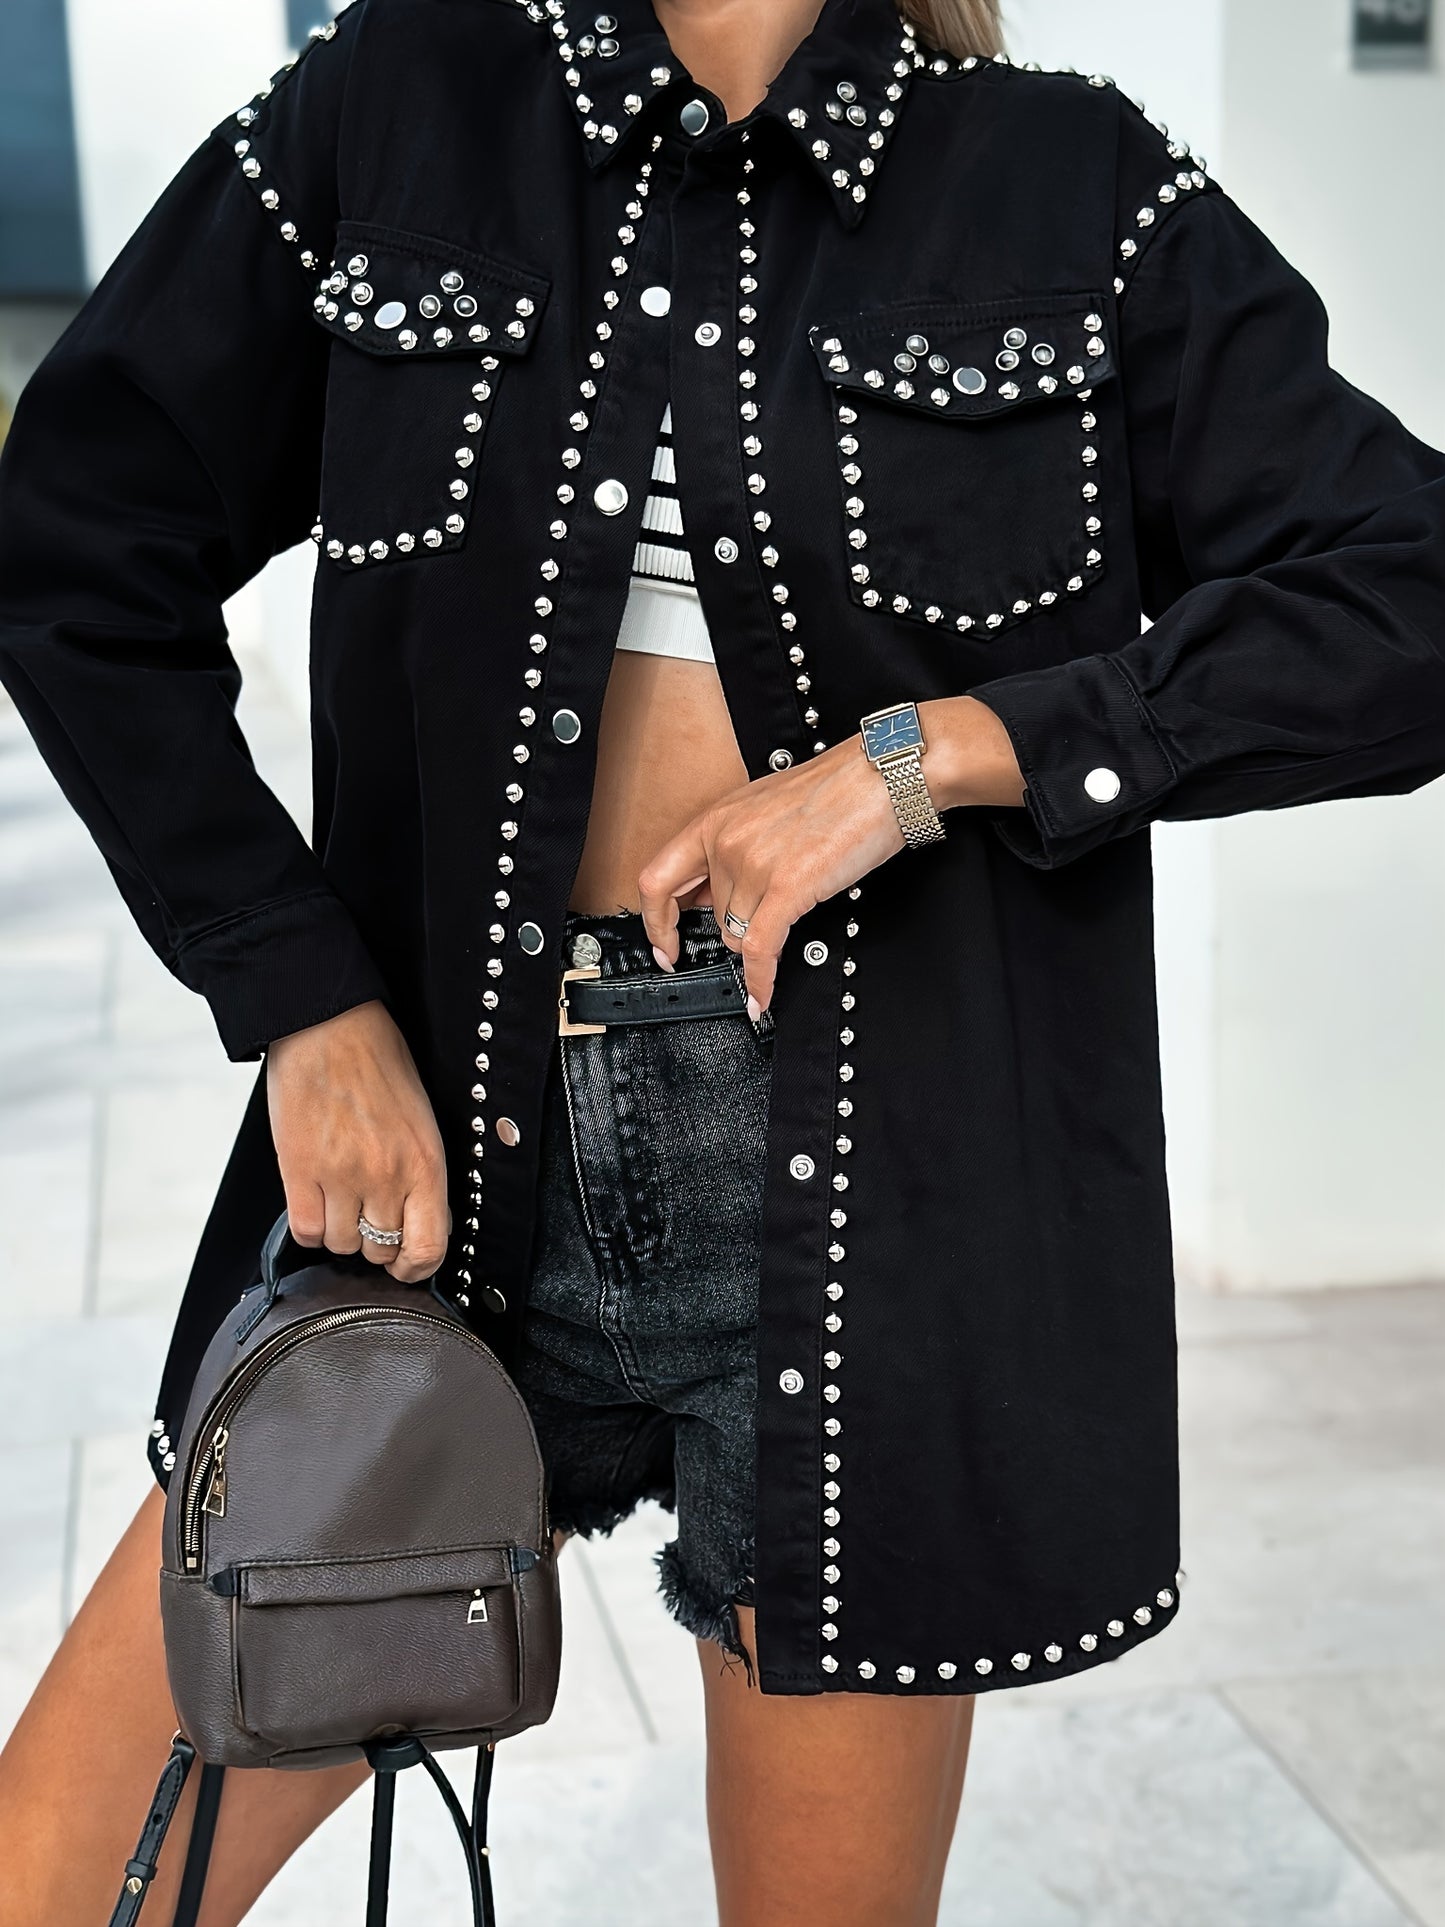 xieyinshe Black Rivet Decor Denim Jackets, Long Sleeves Street Style Lapel Denim Coats, Women's Denim Clothing